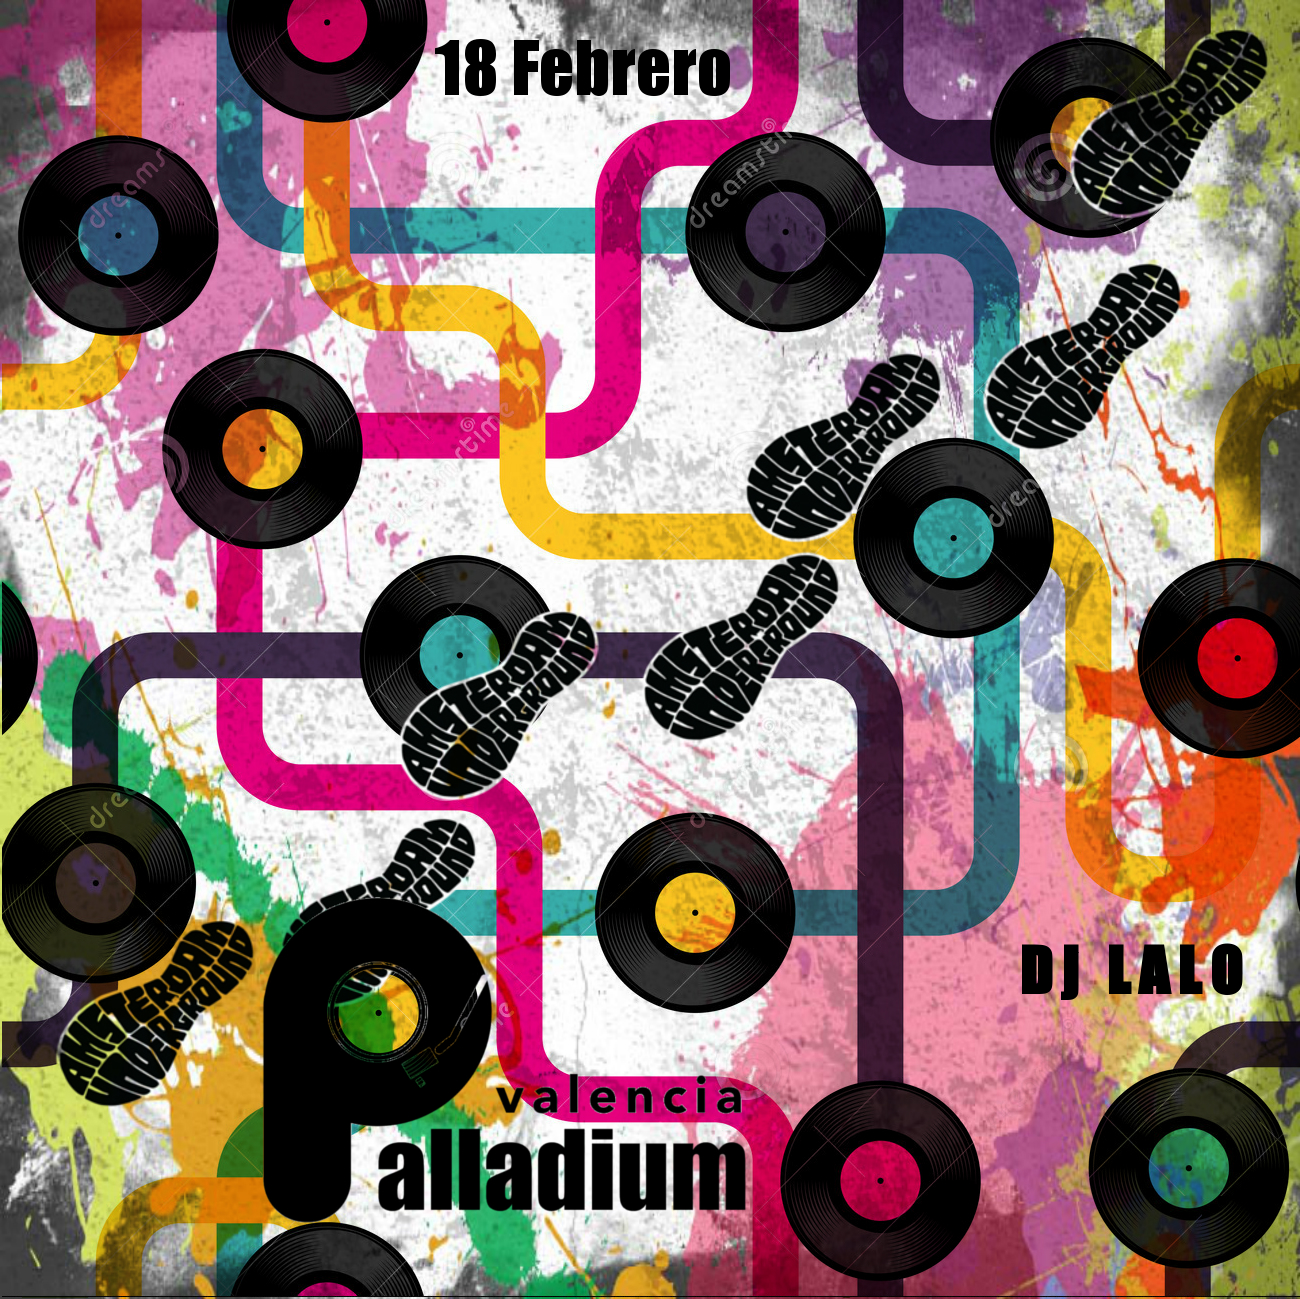 Próxima Palladium Valencia 18 de Febrero 2017